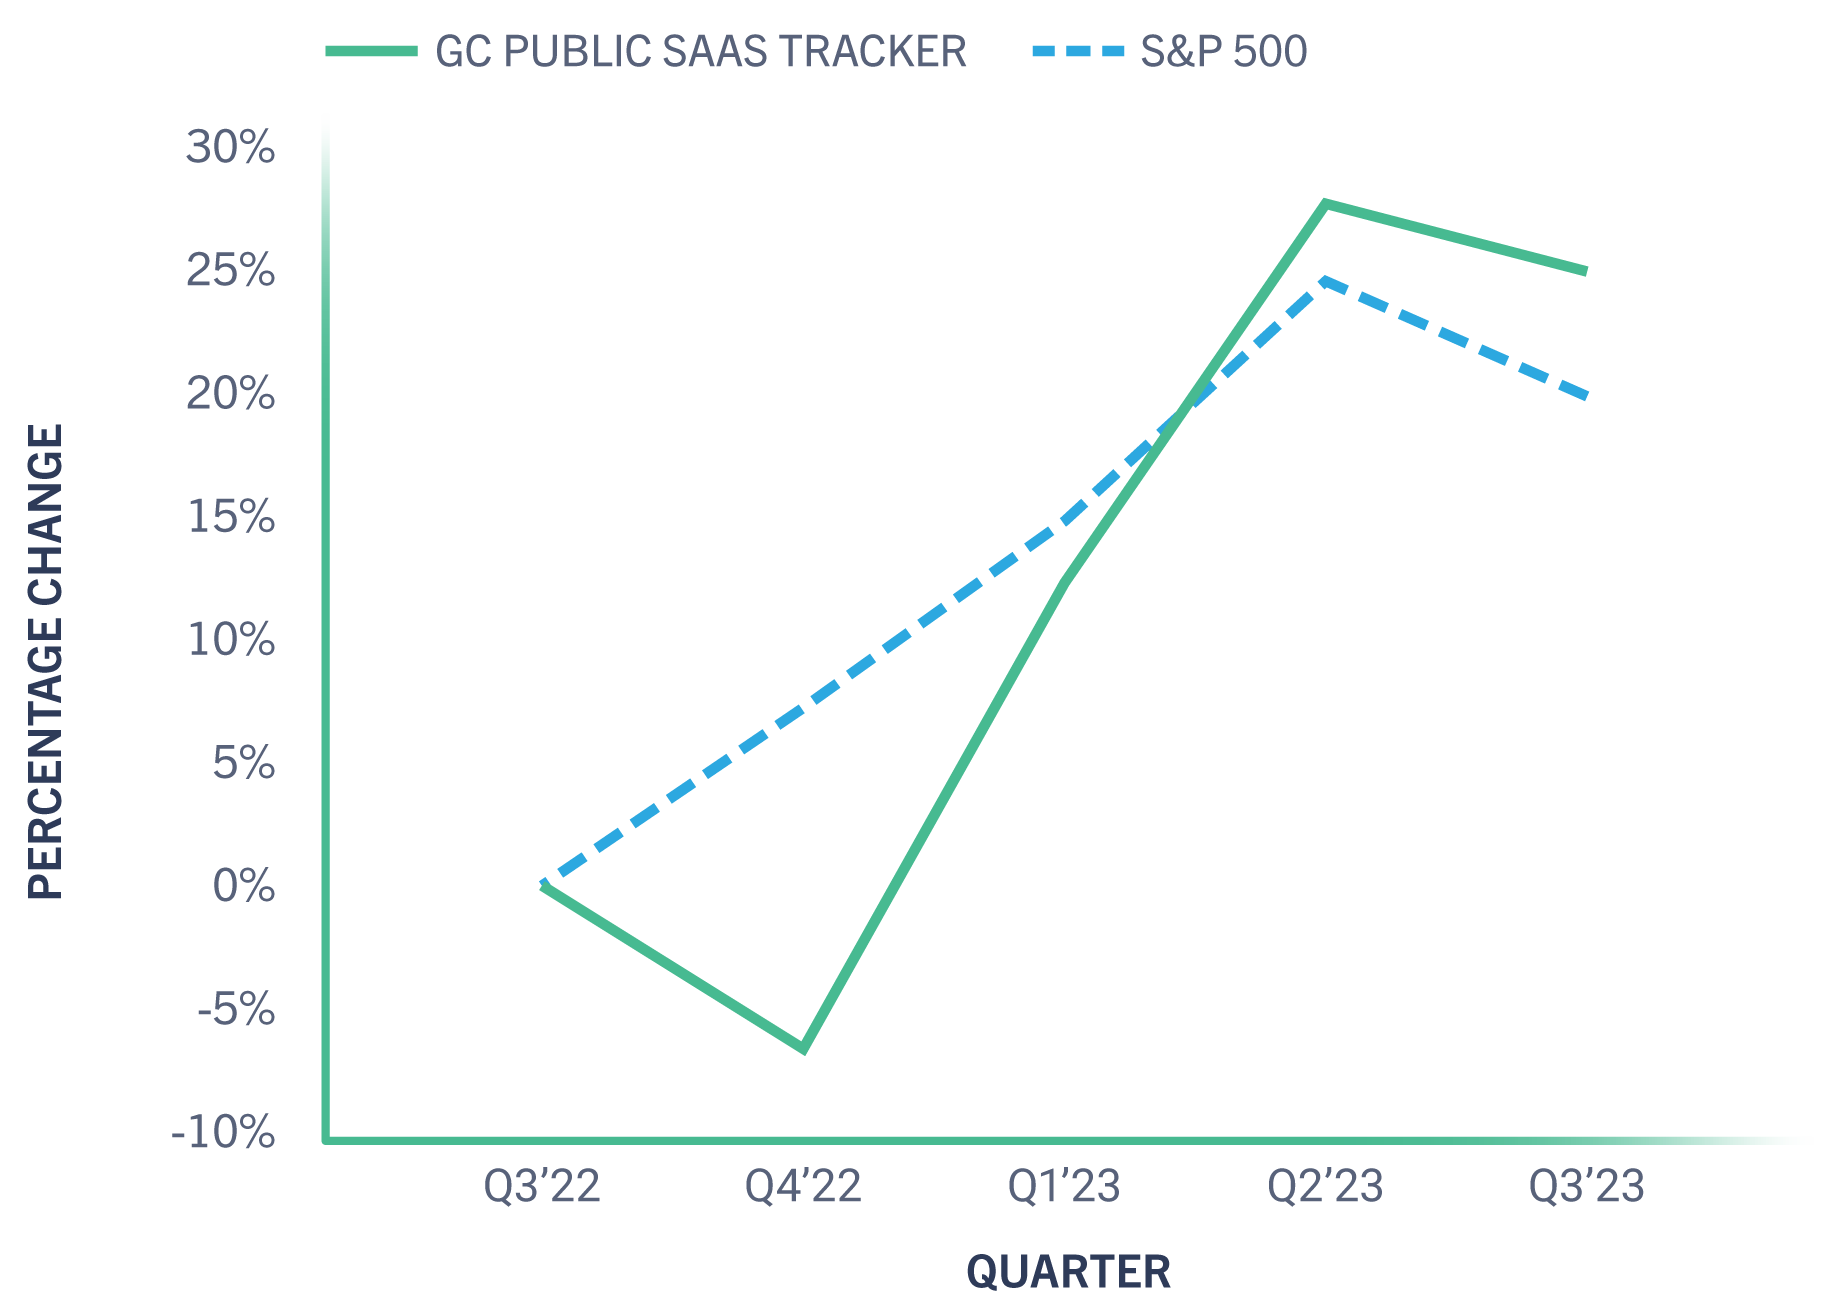 GC Public SaaS Tracker vs. S&P 500 Quarterly Change